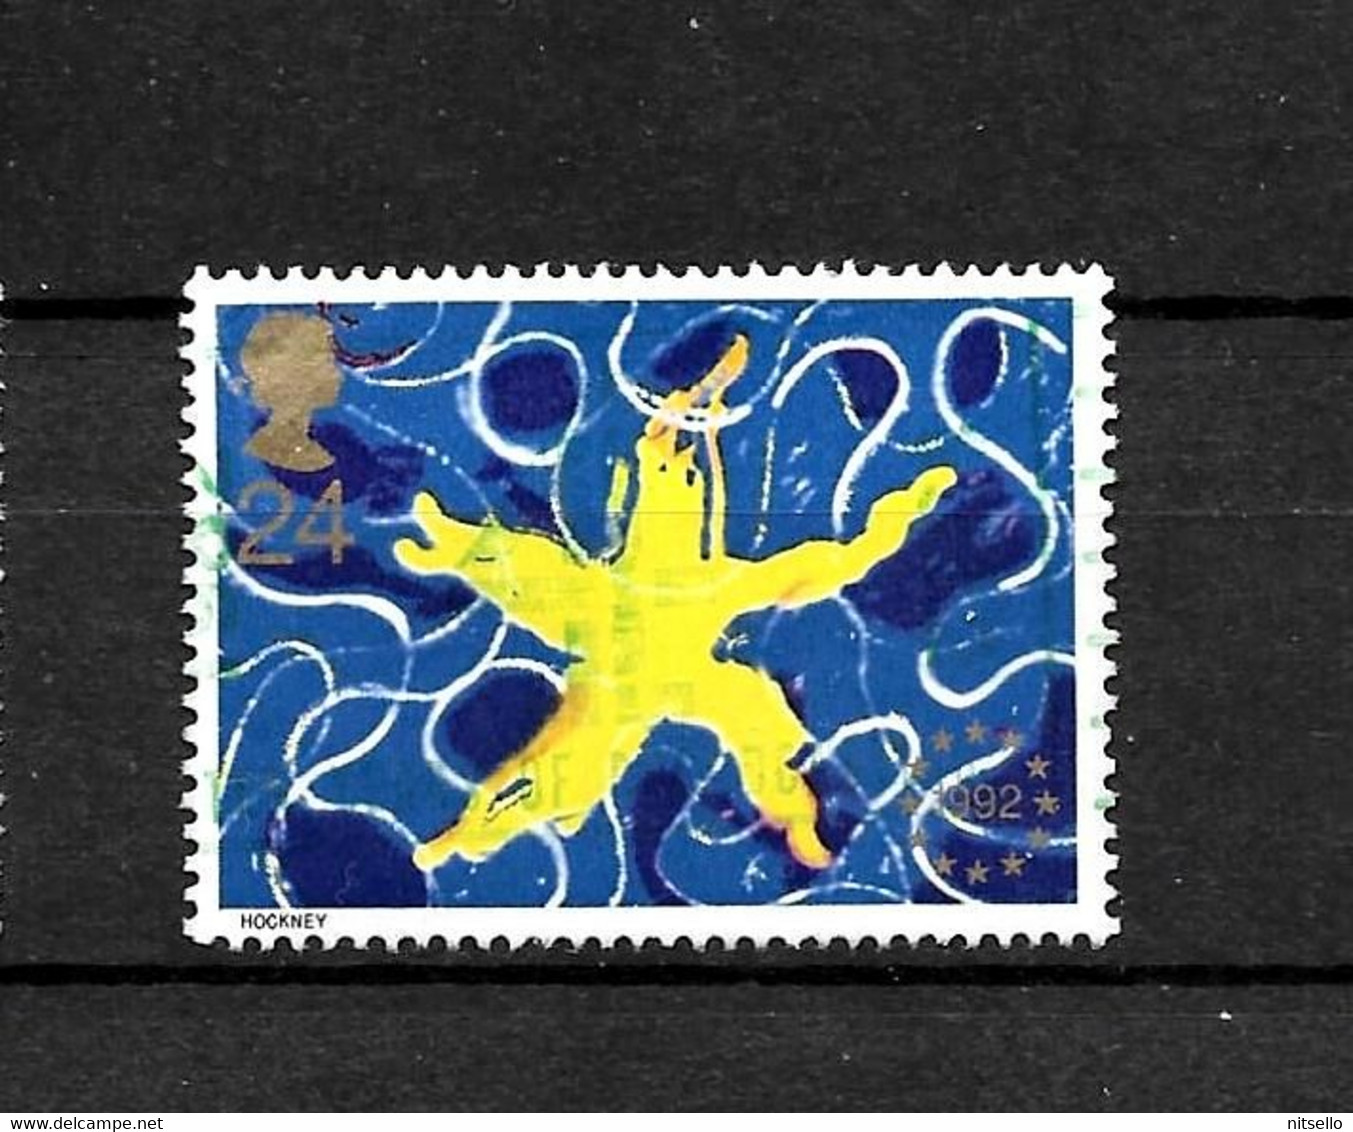 LOTE 2223 ///  GRAN BRETAÑA   YVERT Nº: 1637     ¡¡¡ OFERTA - LIQUIDATION !!! JE LIQUIDE !!! - Used Stamps